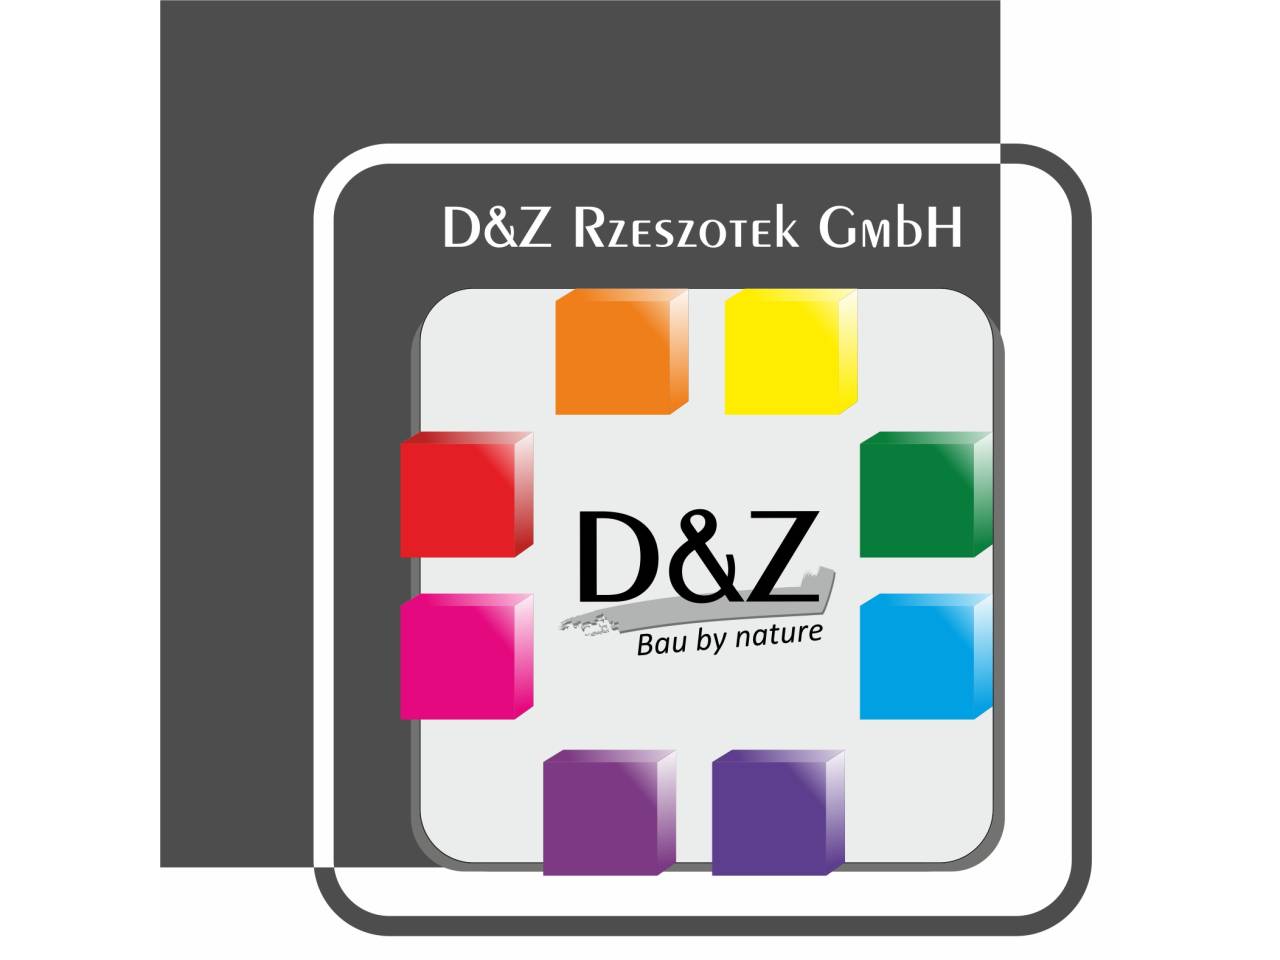 D&amp;Z Rzeszotek GmbH